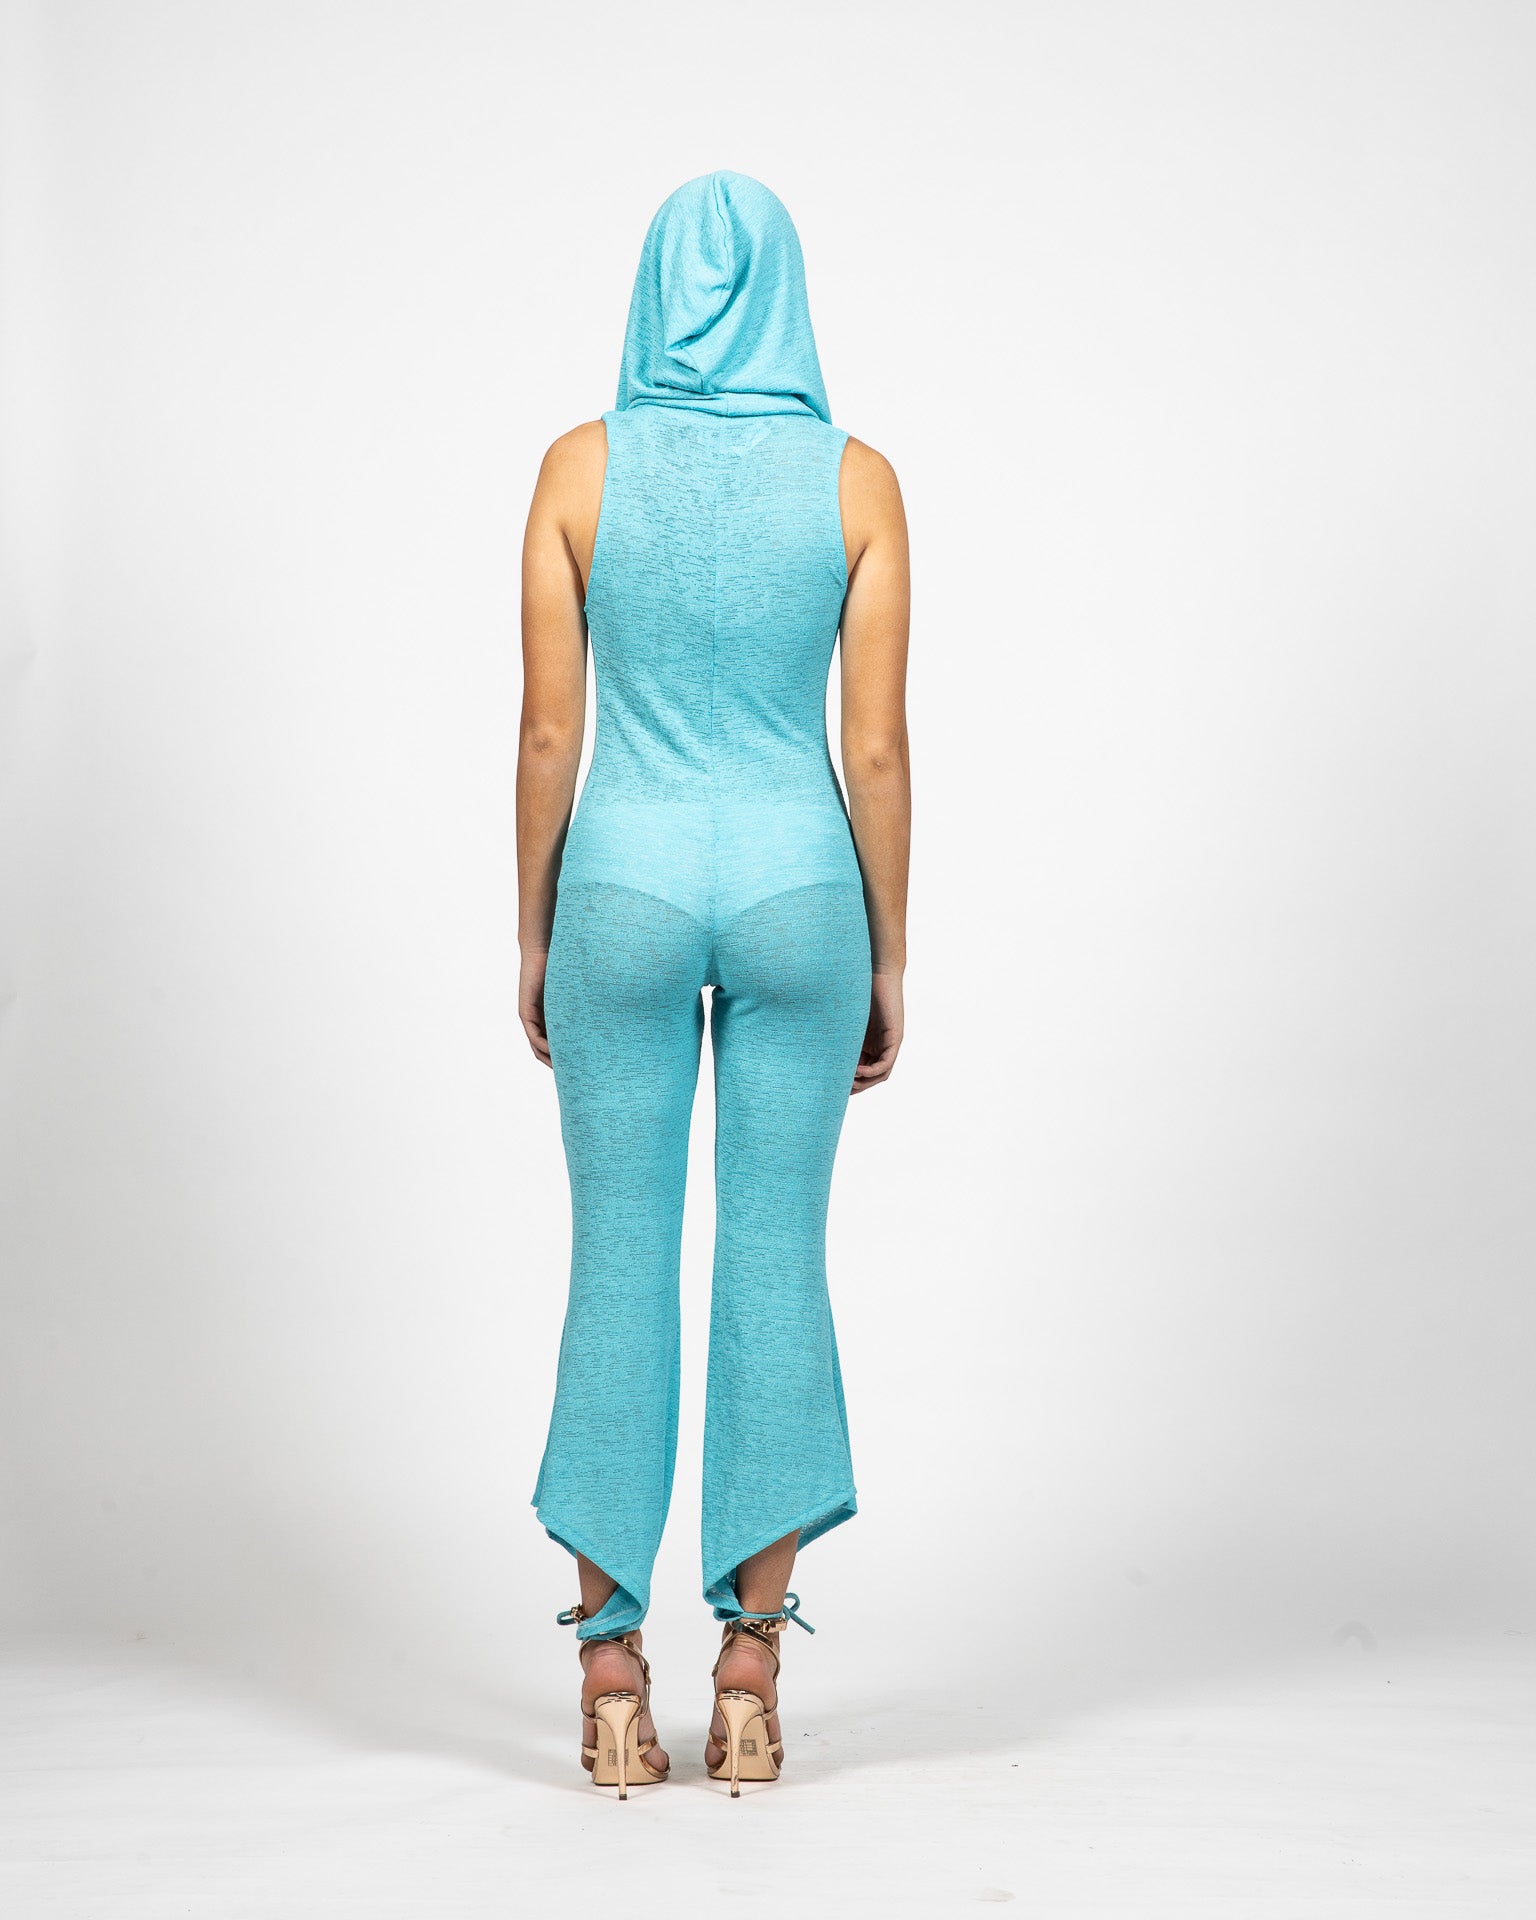 Hooded Bodysuit - Back View - Samuel Vartan